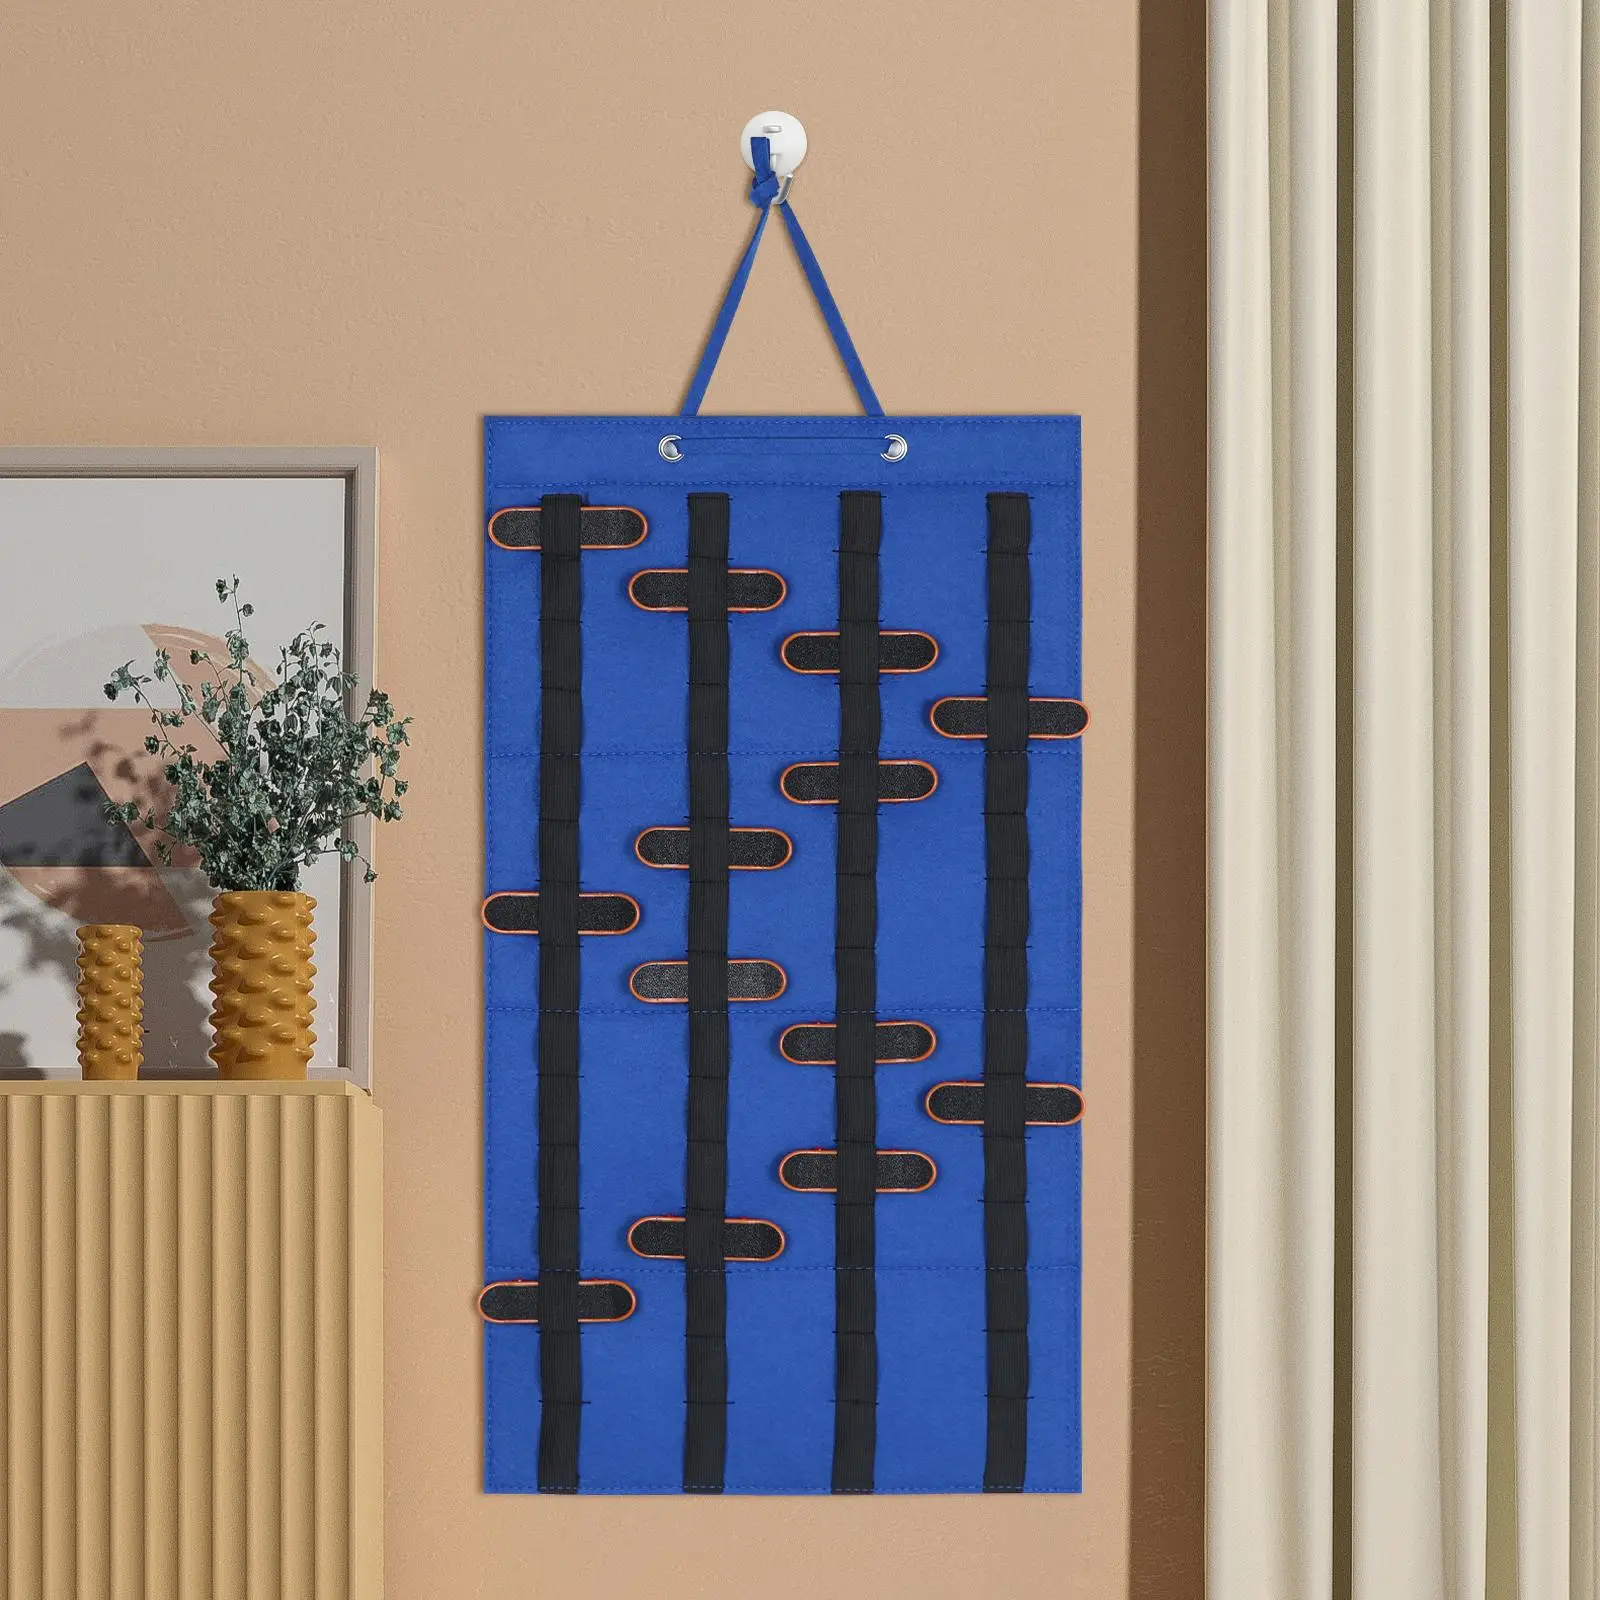 Hanging Finger Skateboard Holder Storage Rack, Home Ornaments, Wall Mounted